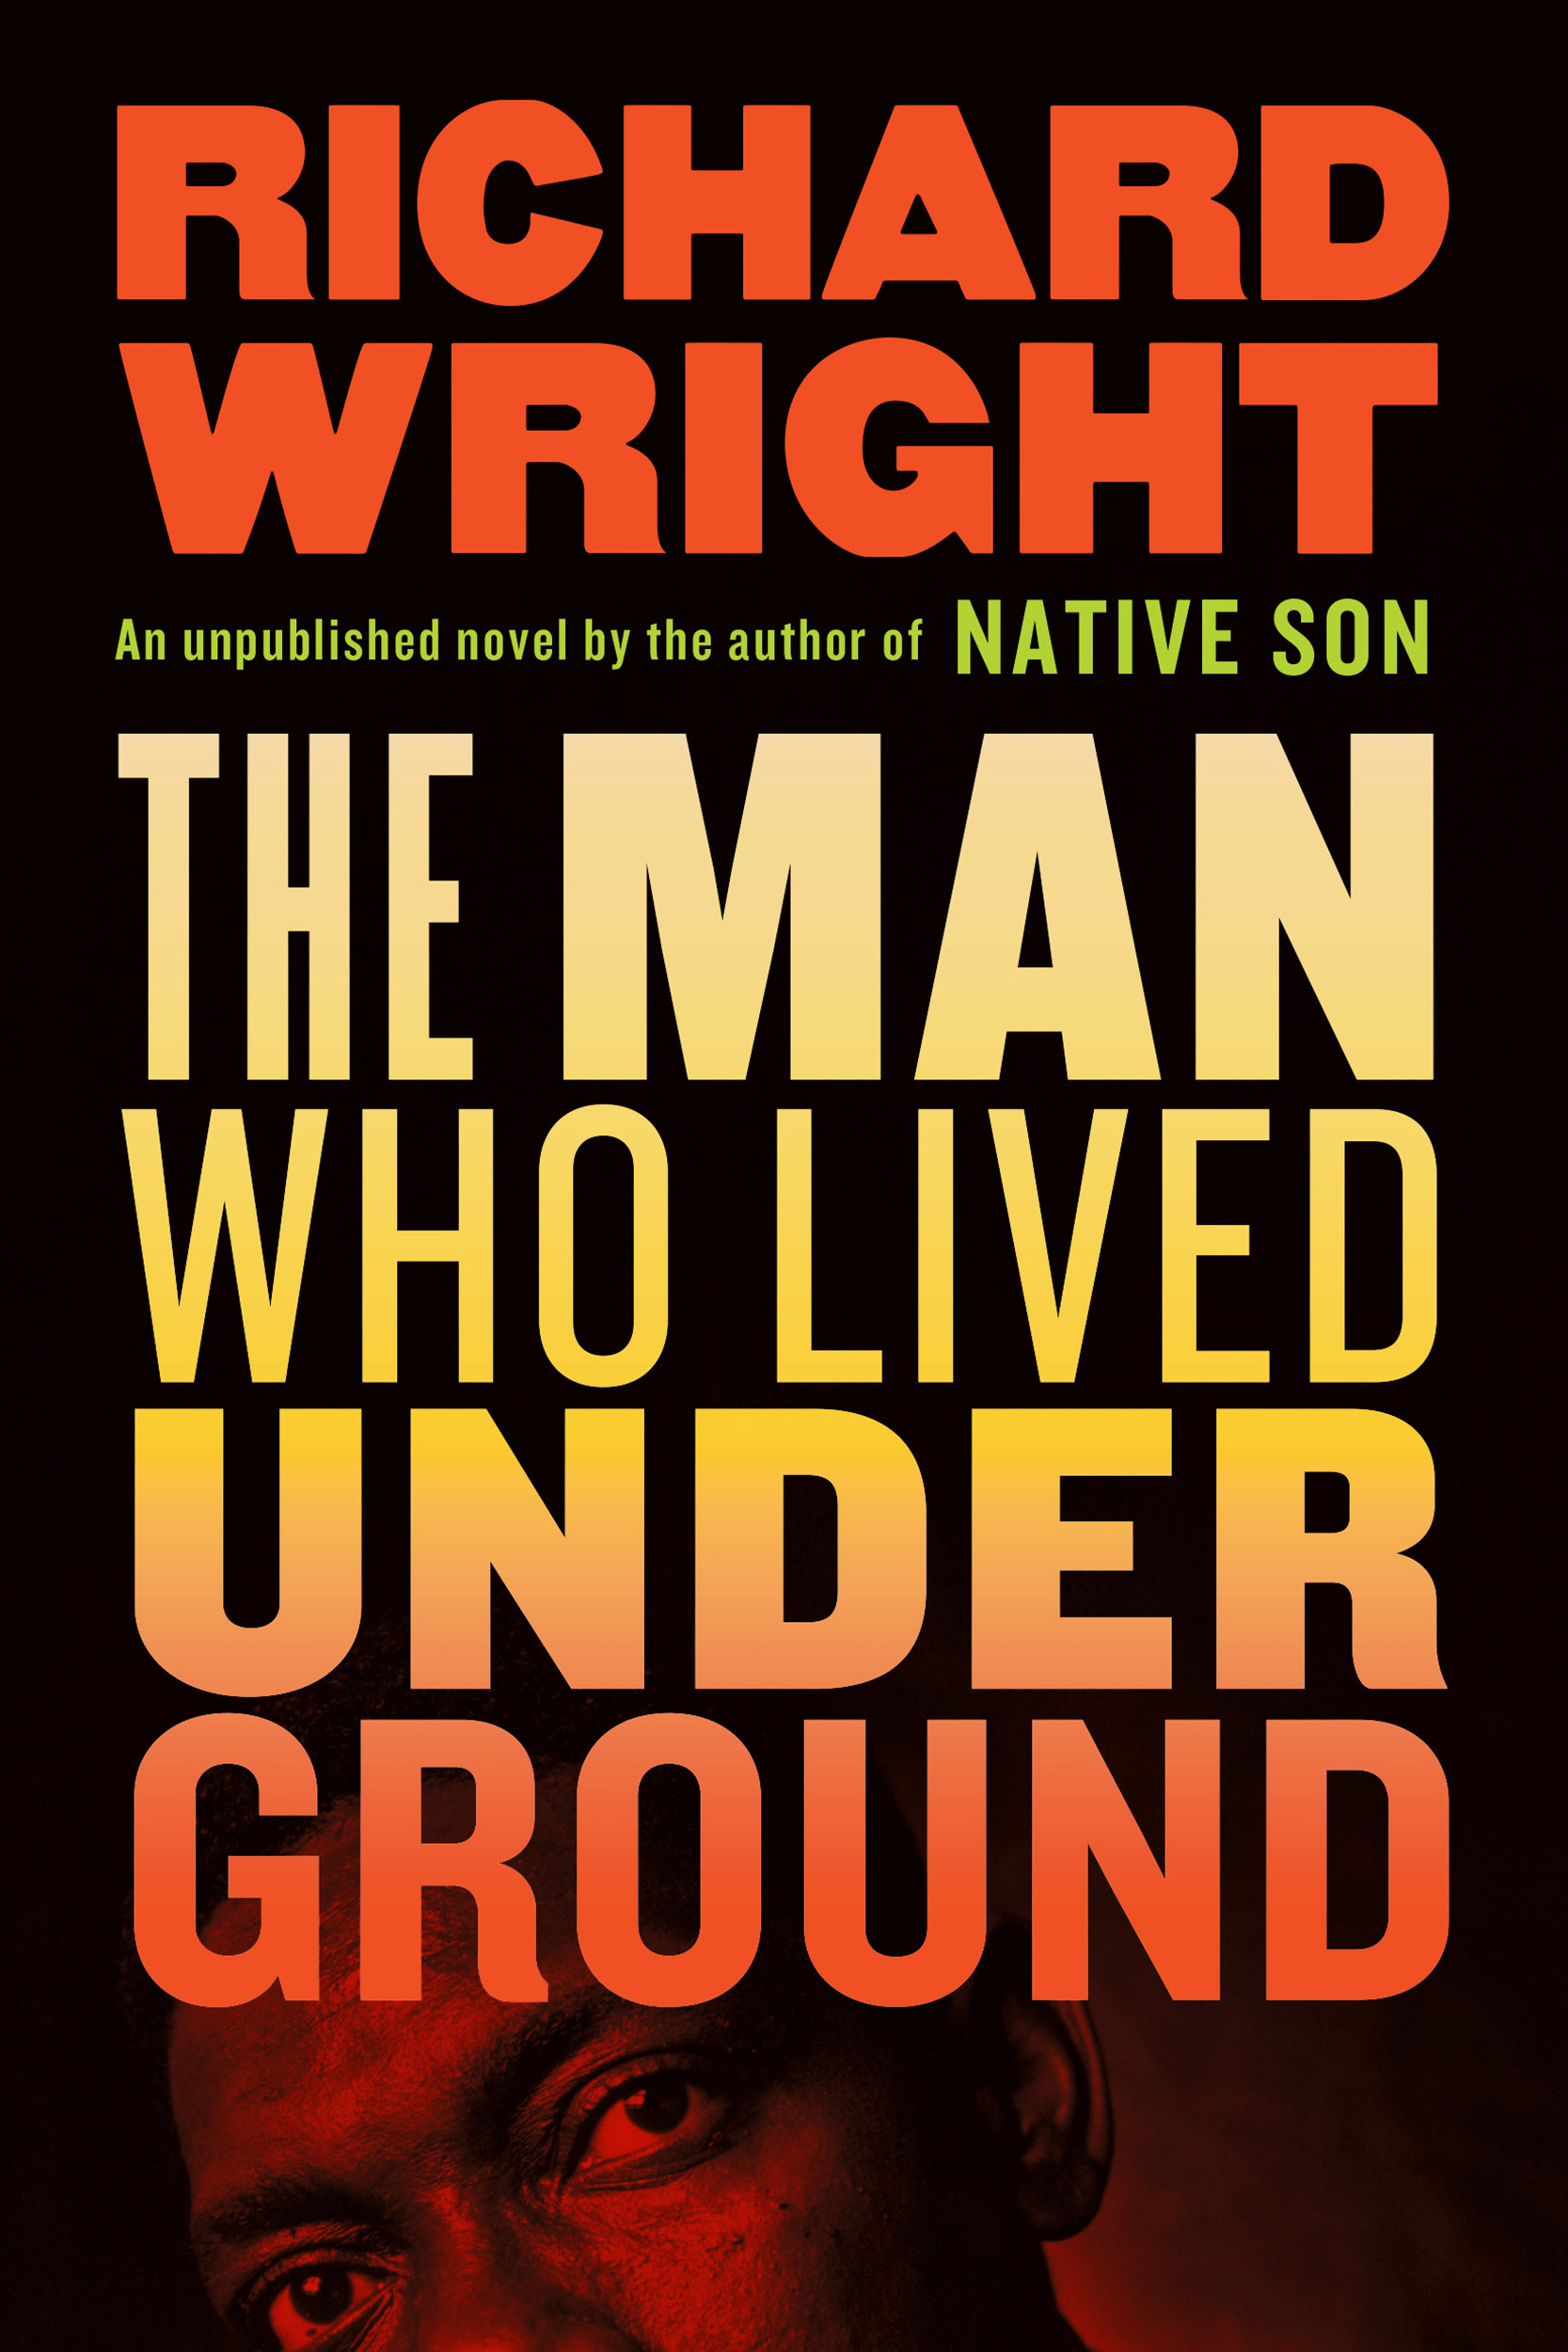 Richard Wright book.